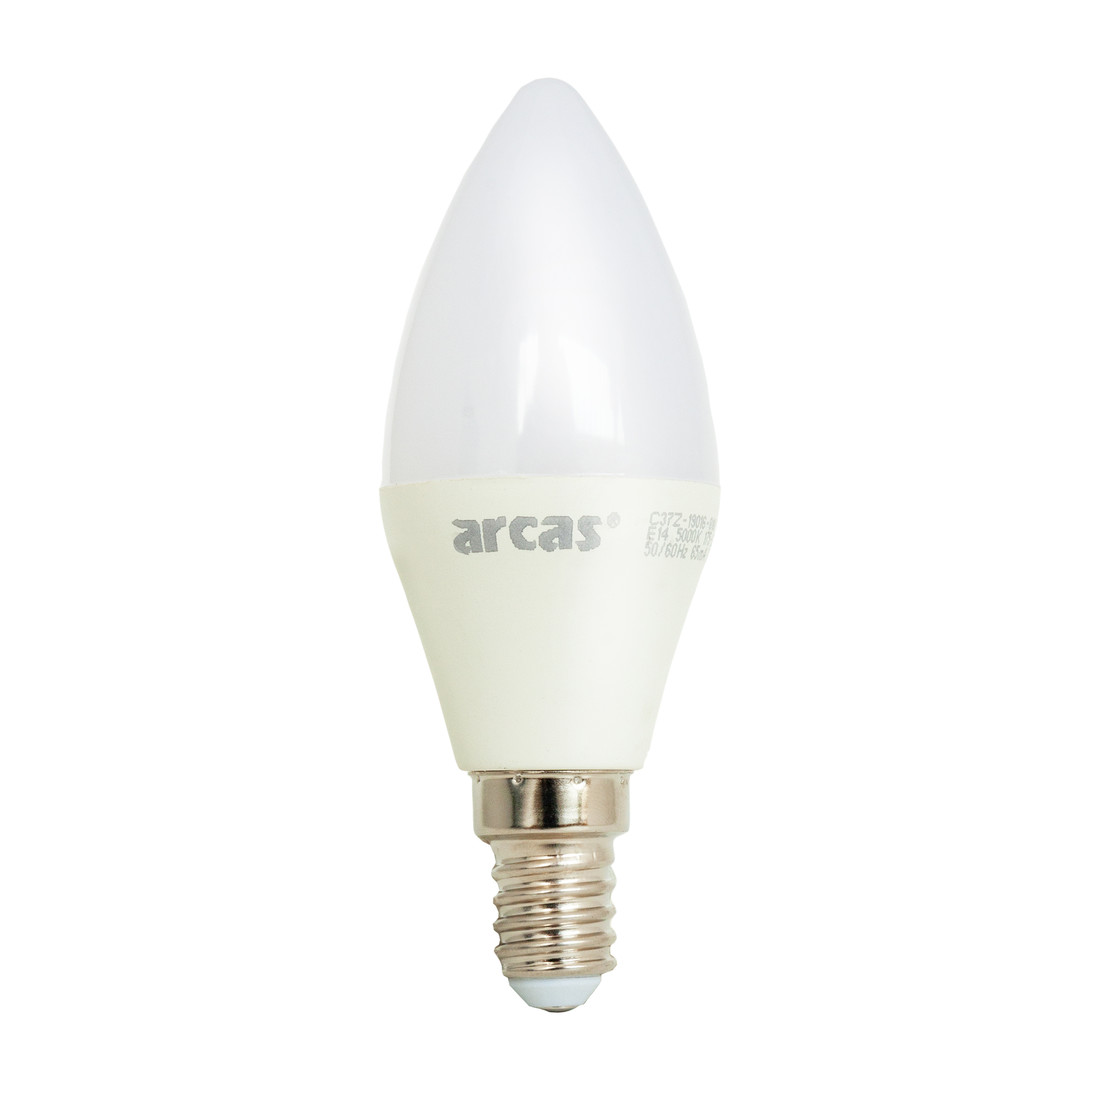 Arcas E14 LED Lampe Birne 8W 5000K 720 Lumen Tageslicht